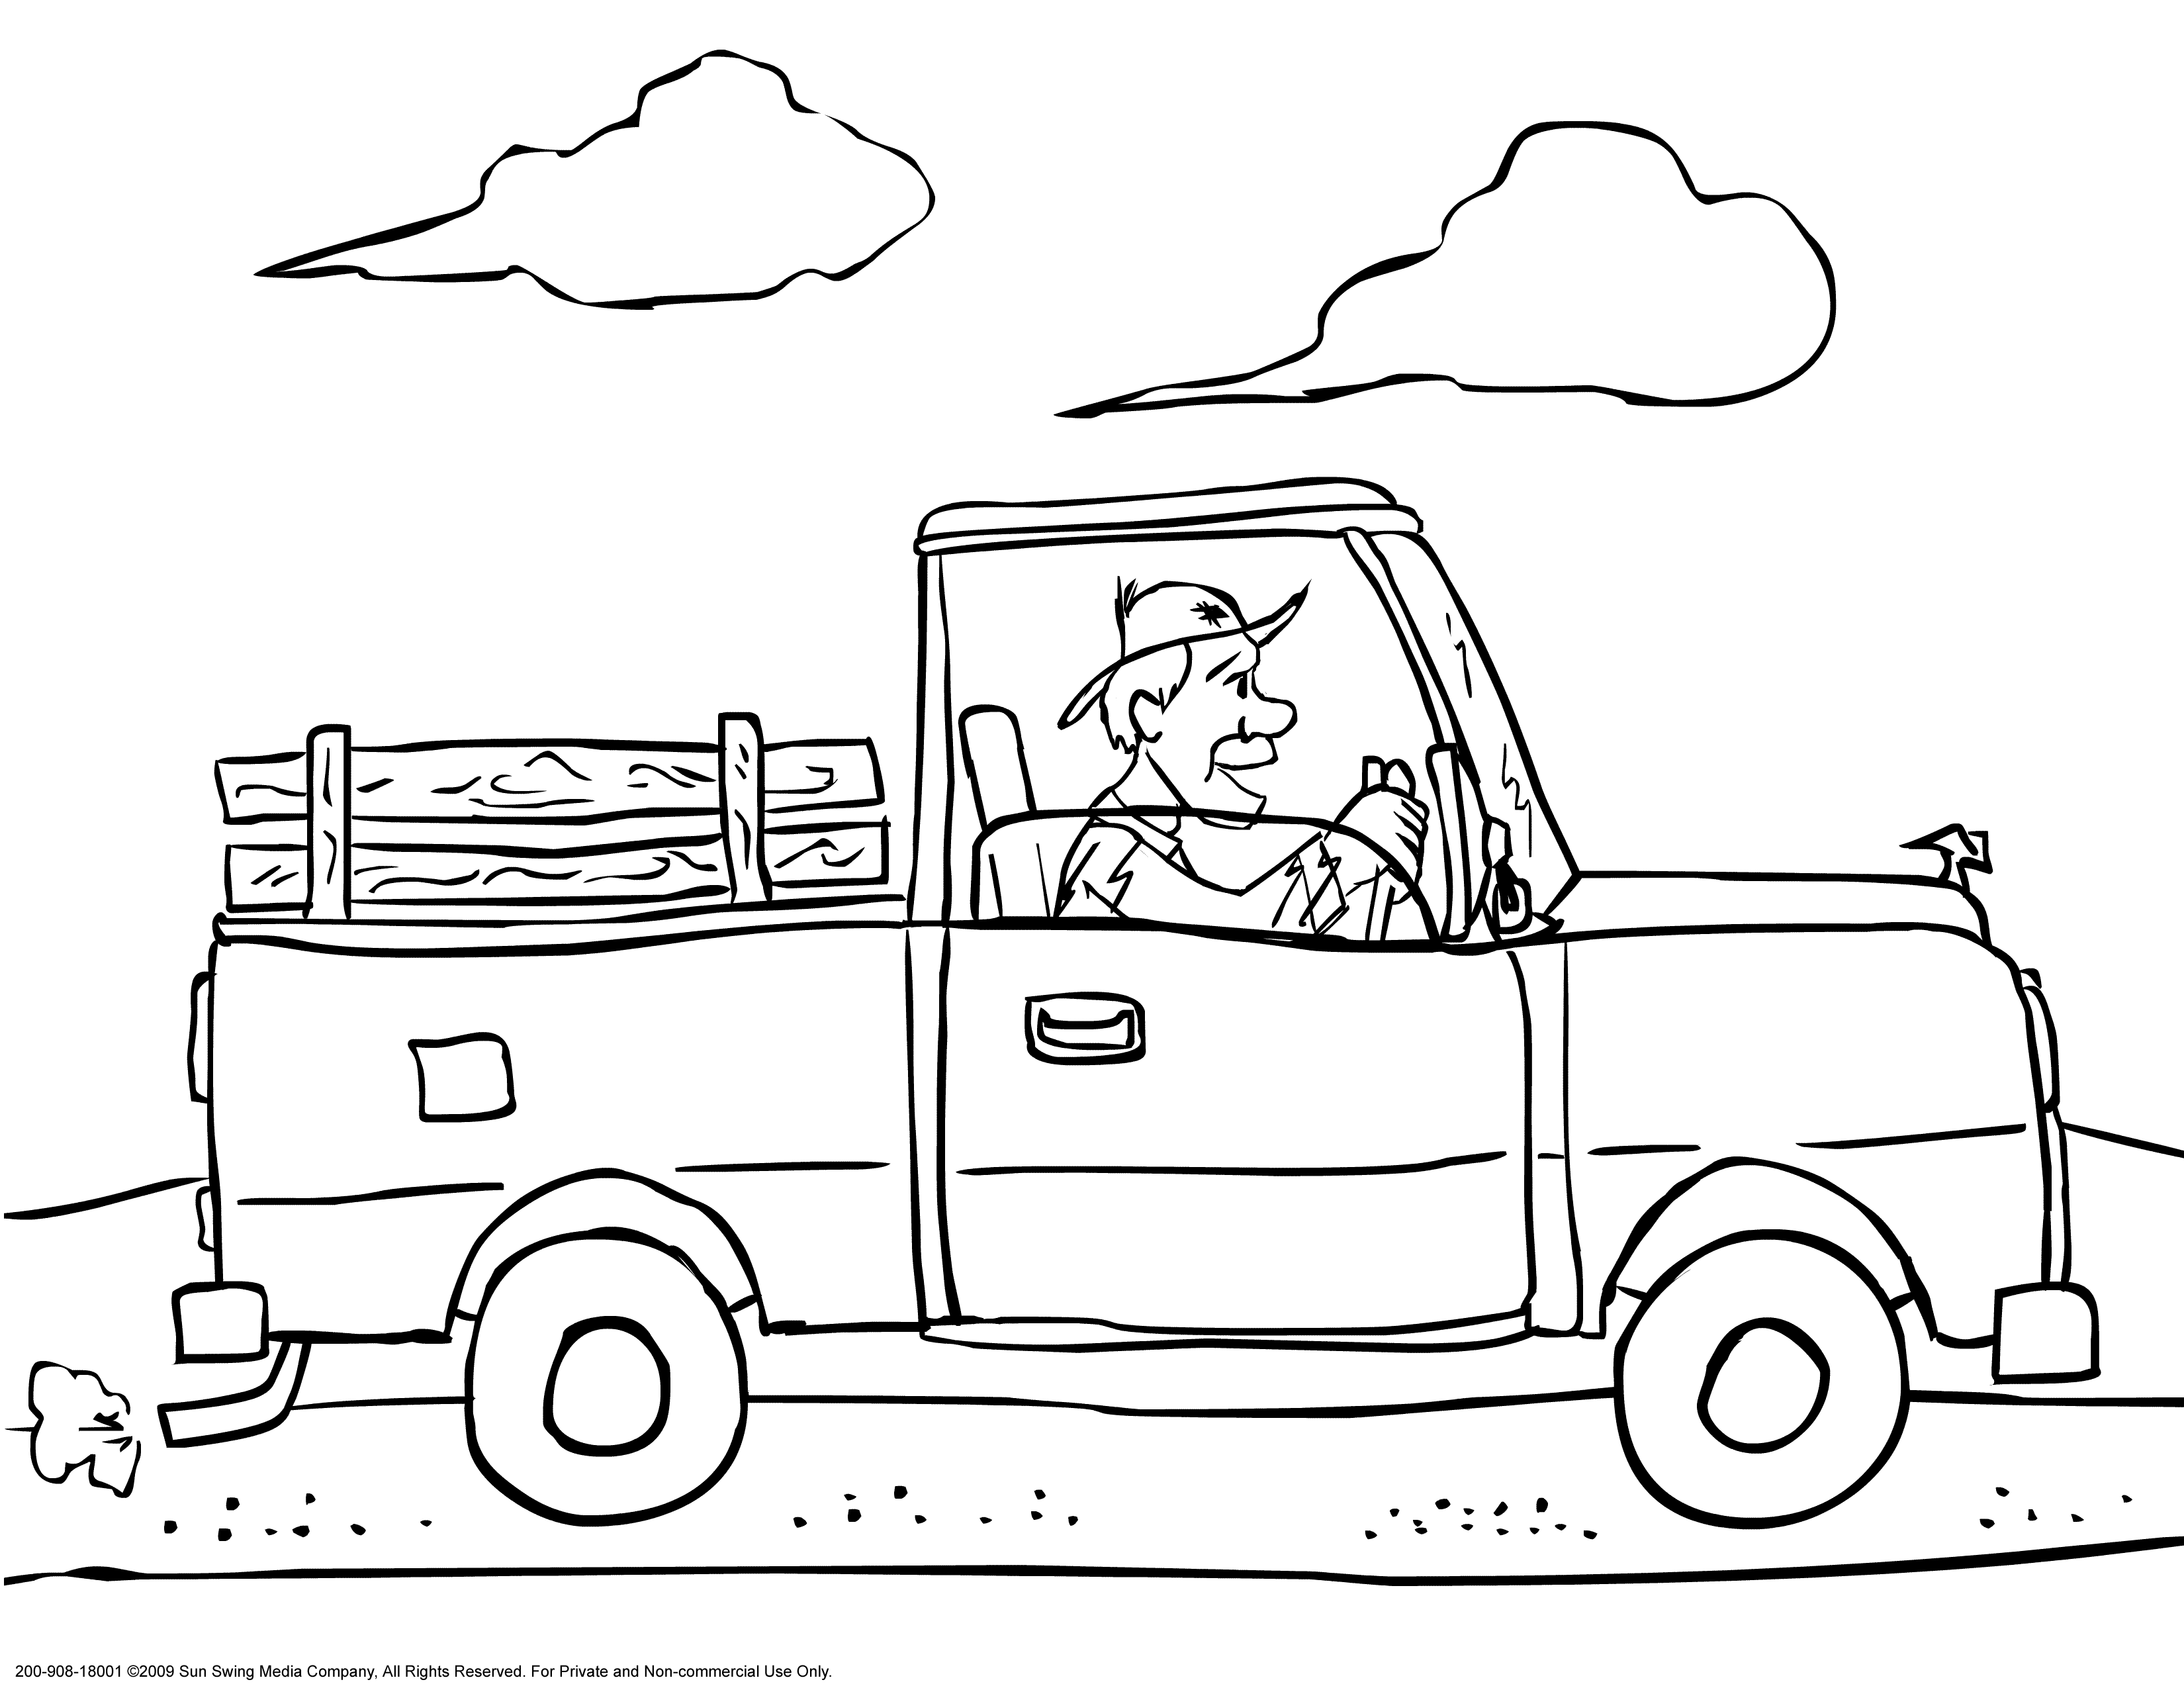  Free coloring pages trucks – letscoloringpages.com – Antique Truck